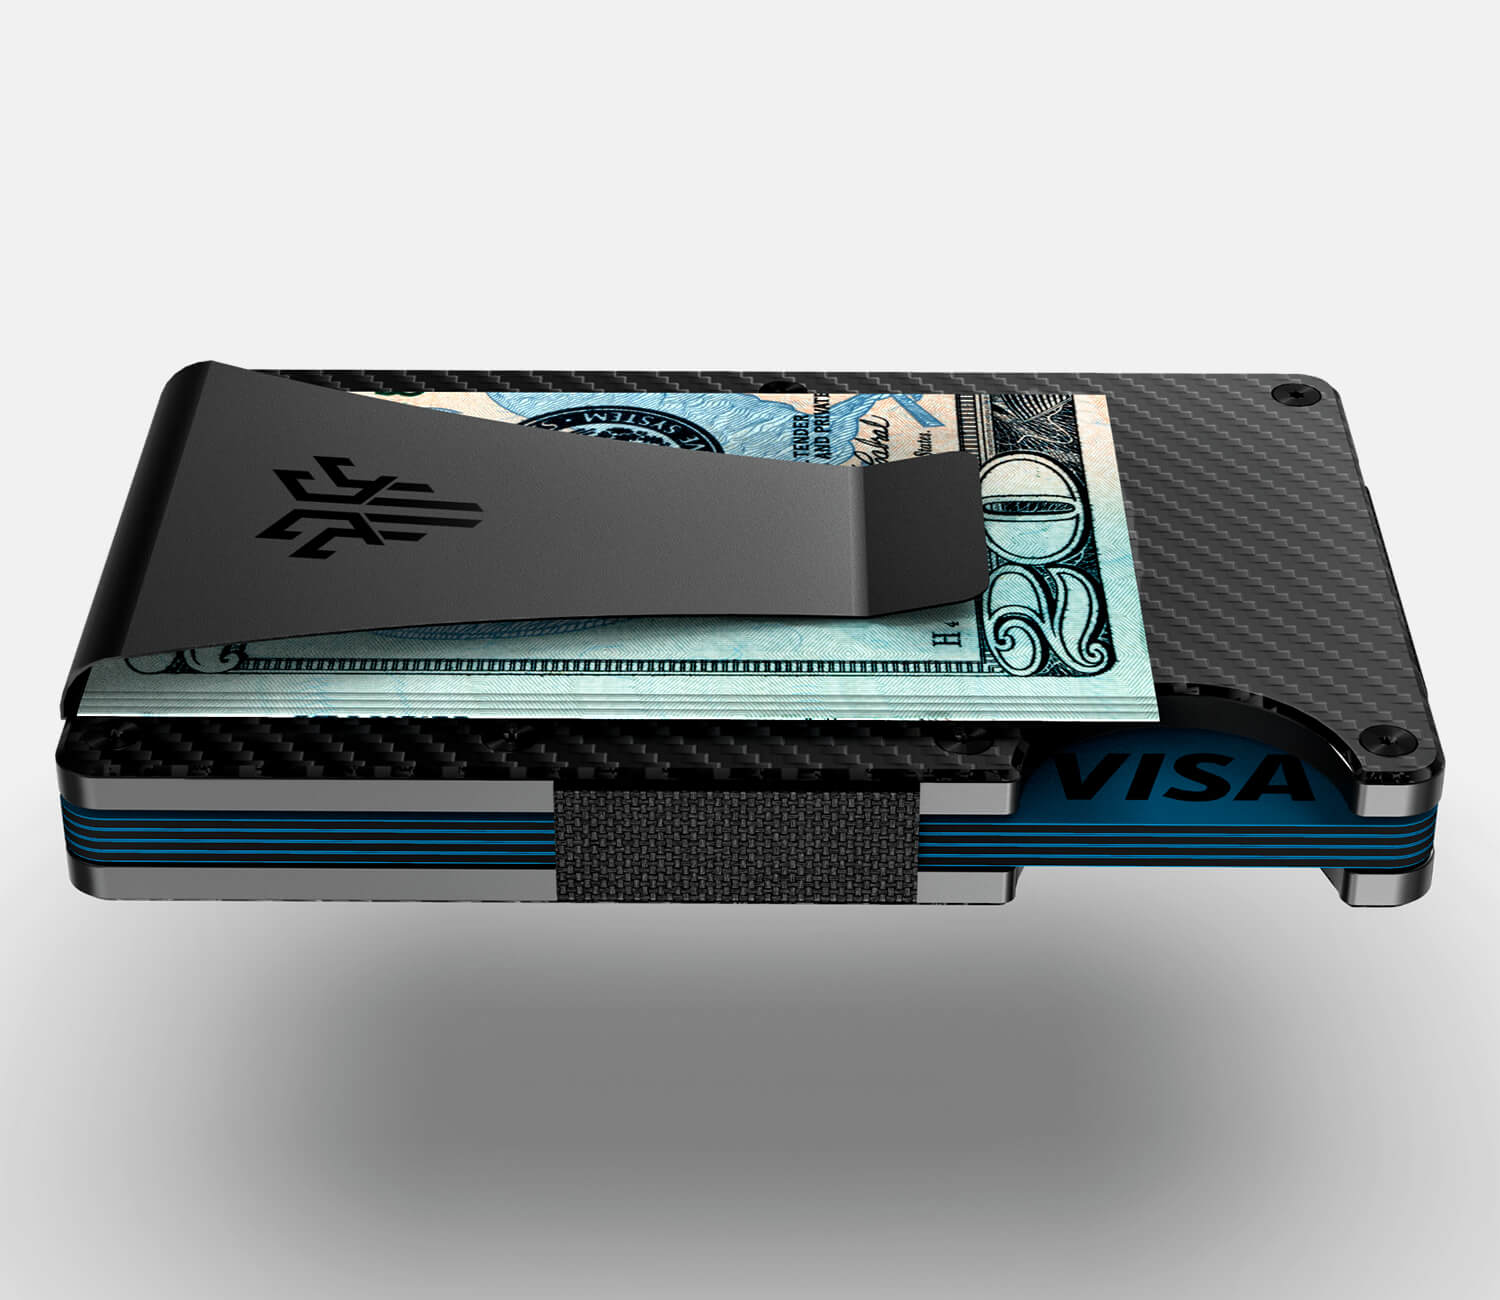 TITAN X Wallet Money Clip Carbon Fiber | Minimalist Slim Metal anti RFID Wallet For Men | Front Pocket Minimalist and Slim